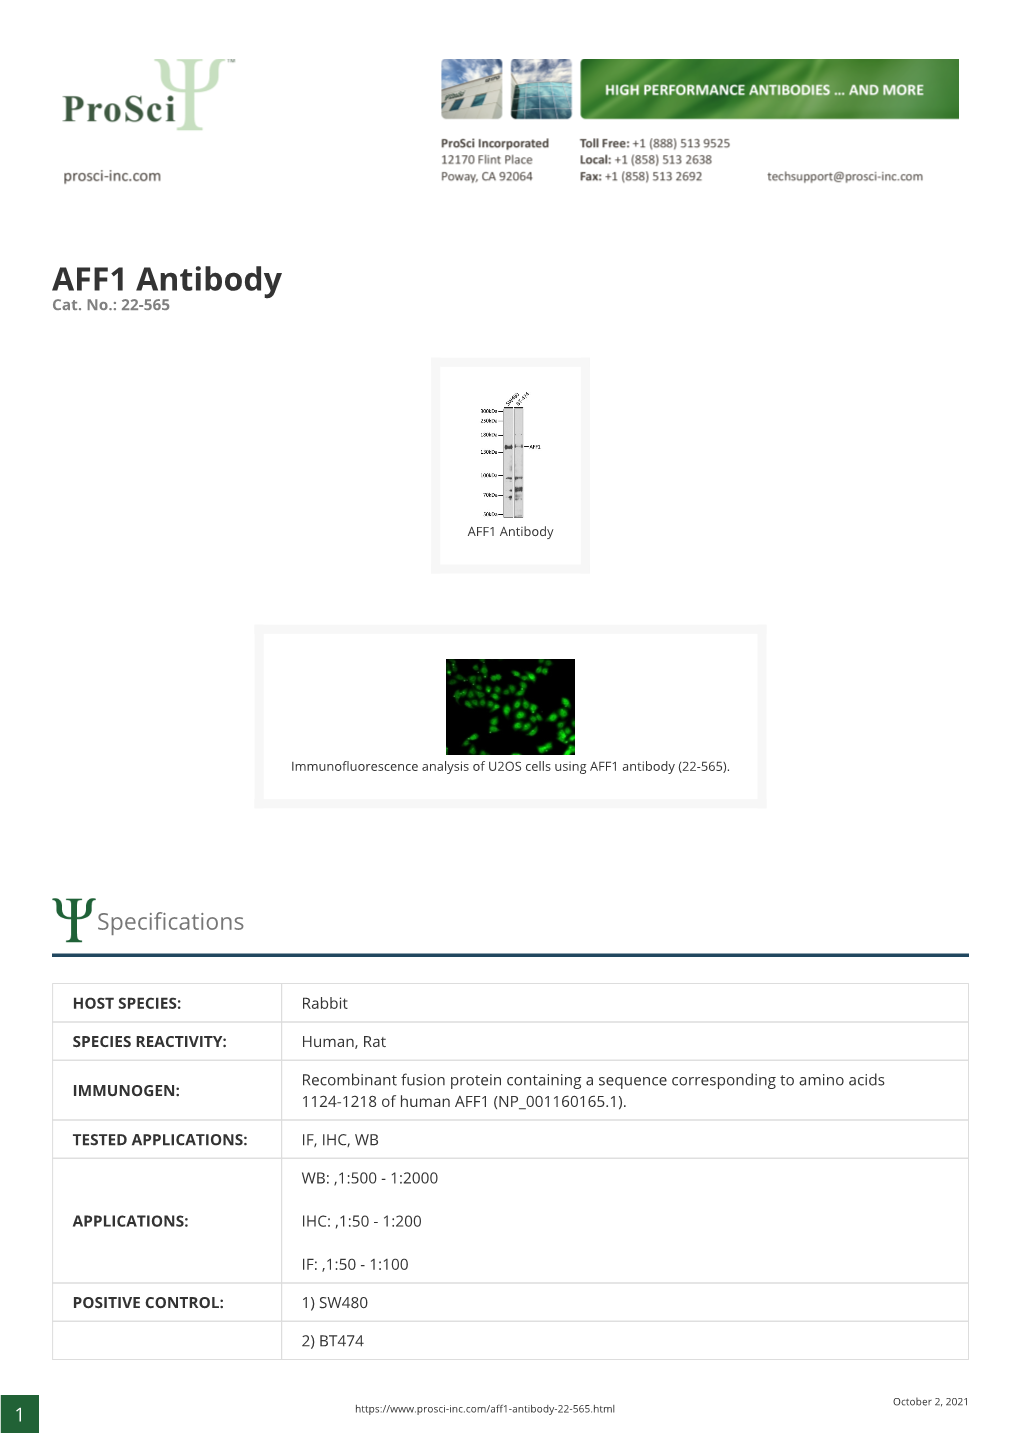 AFF1 Antibody Cat